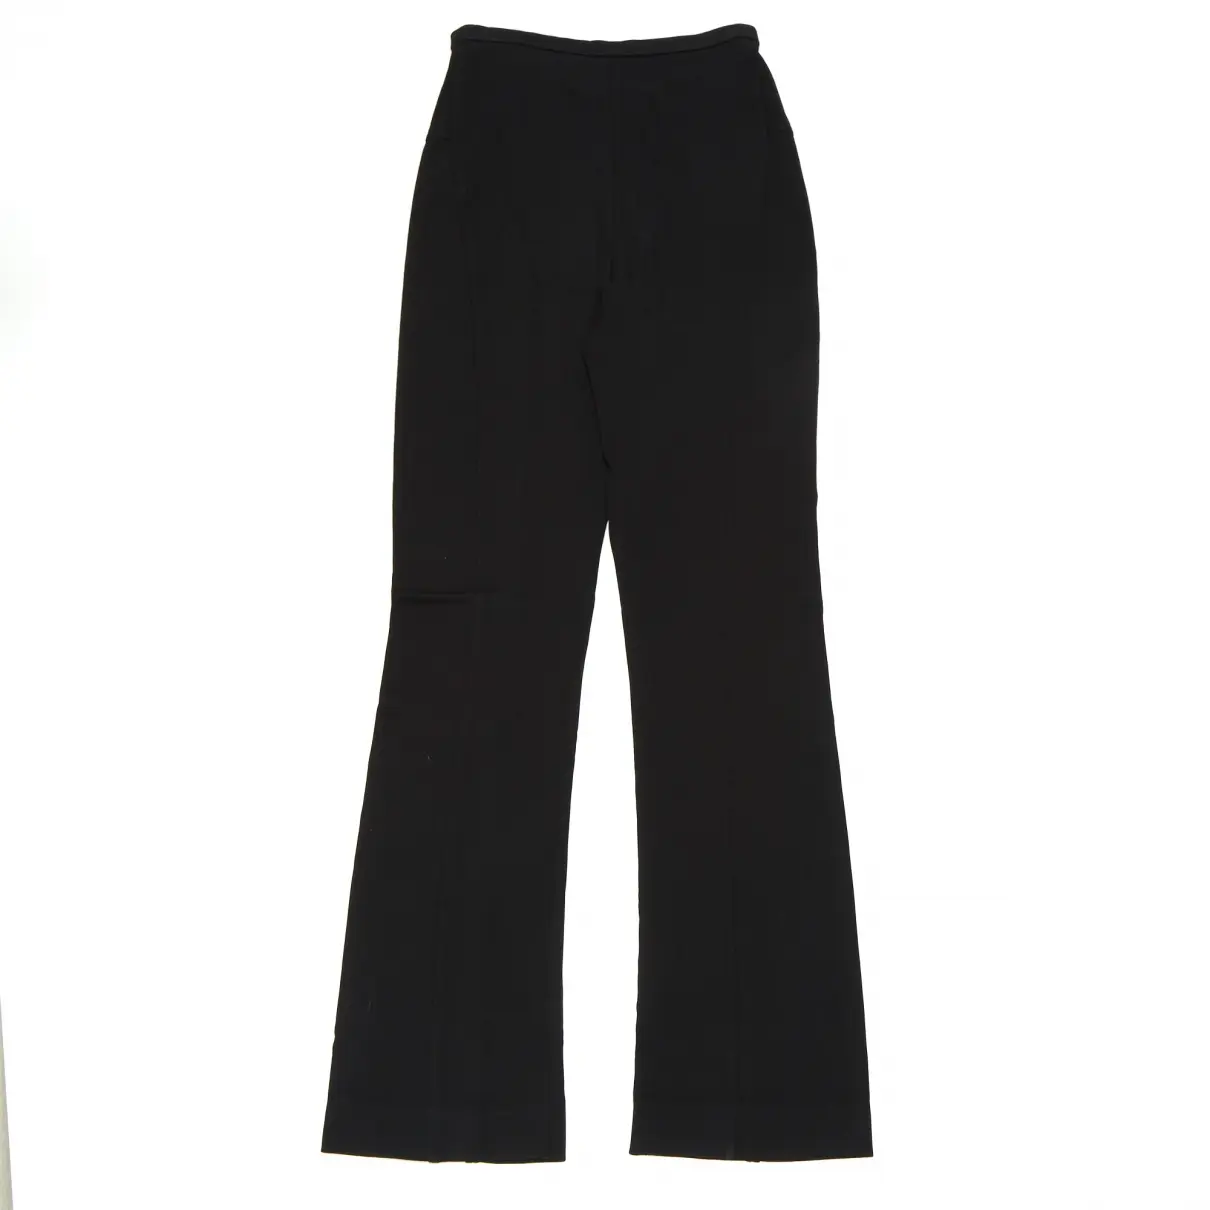 Buy Donna Karan Large pants online